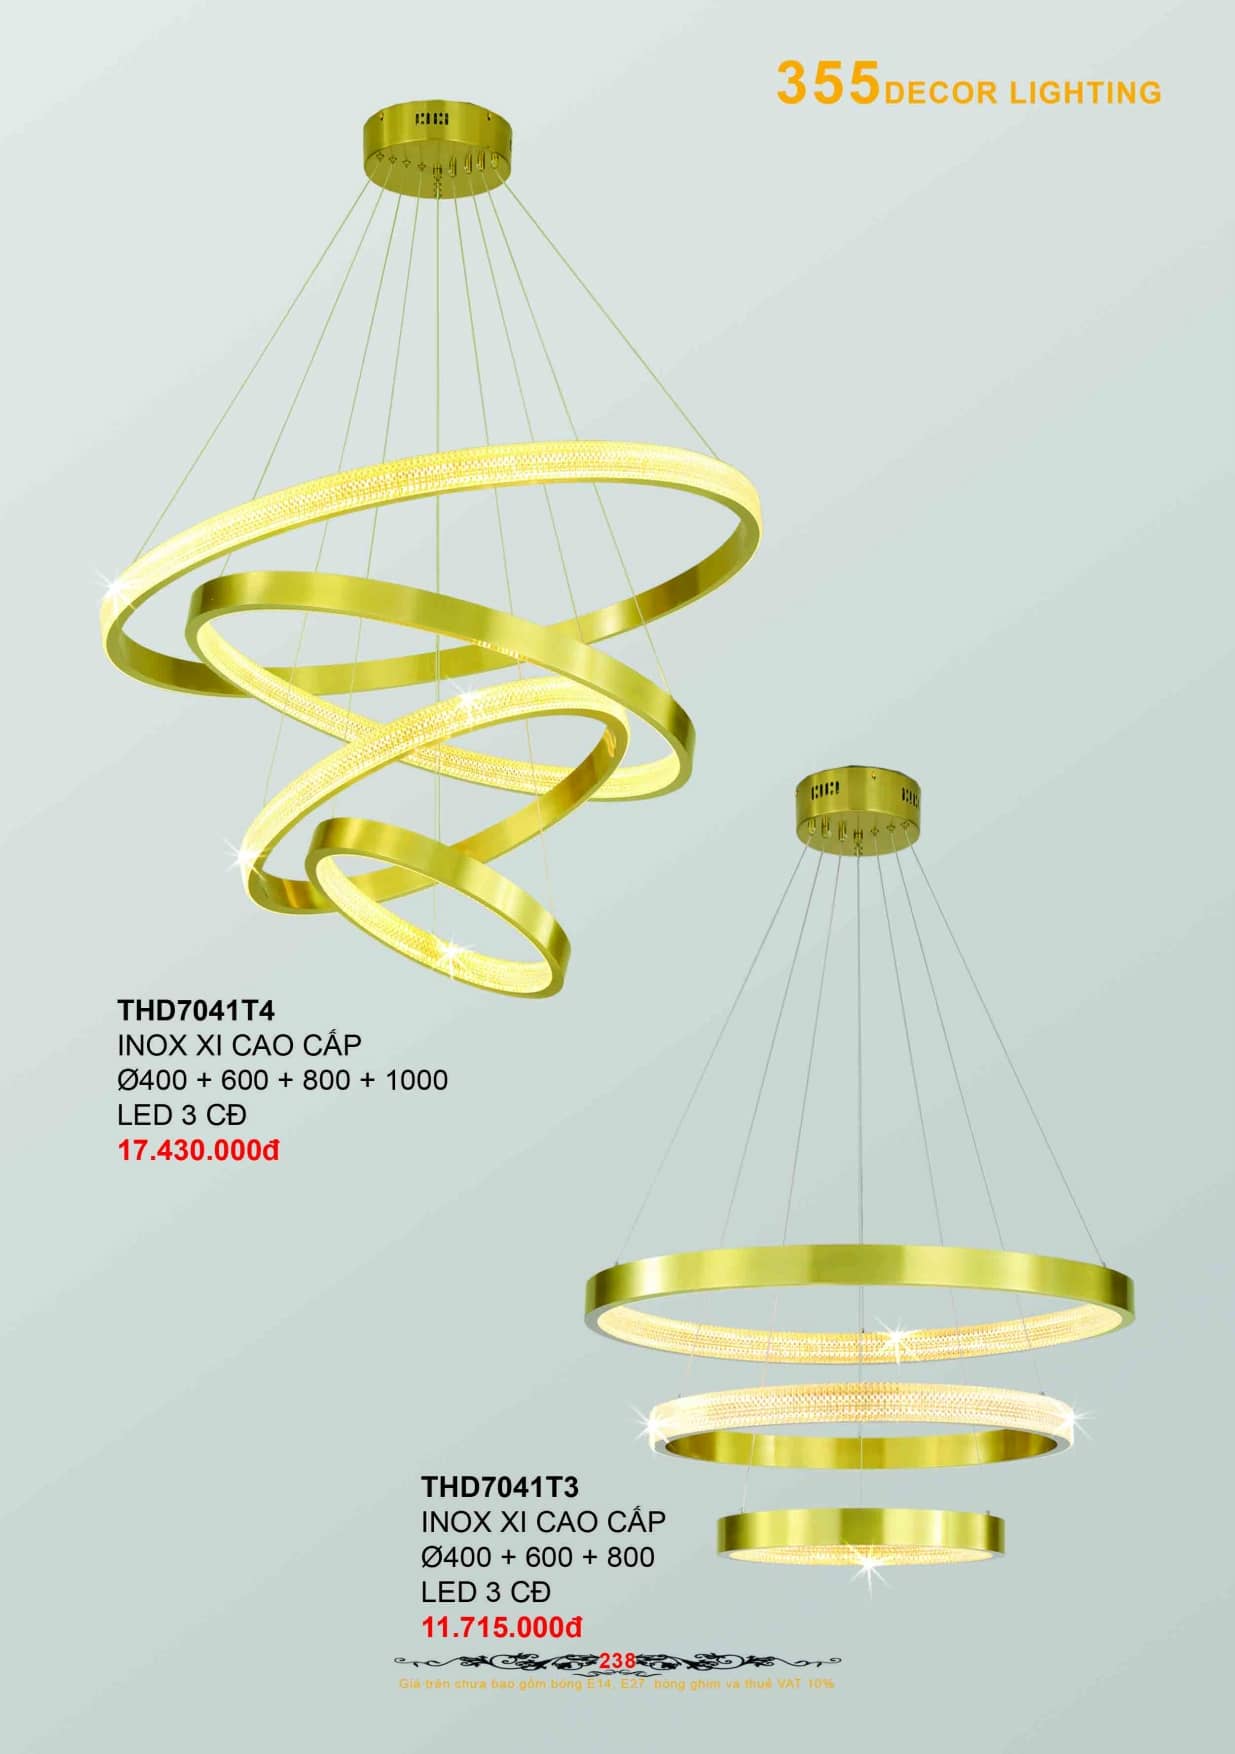 catalogue-bang-gia-den-led-trang-tri-355-lighting-280